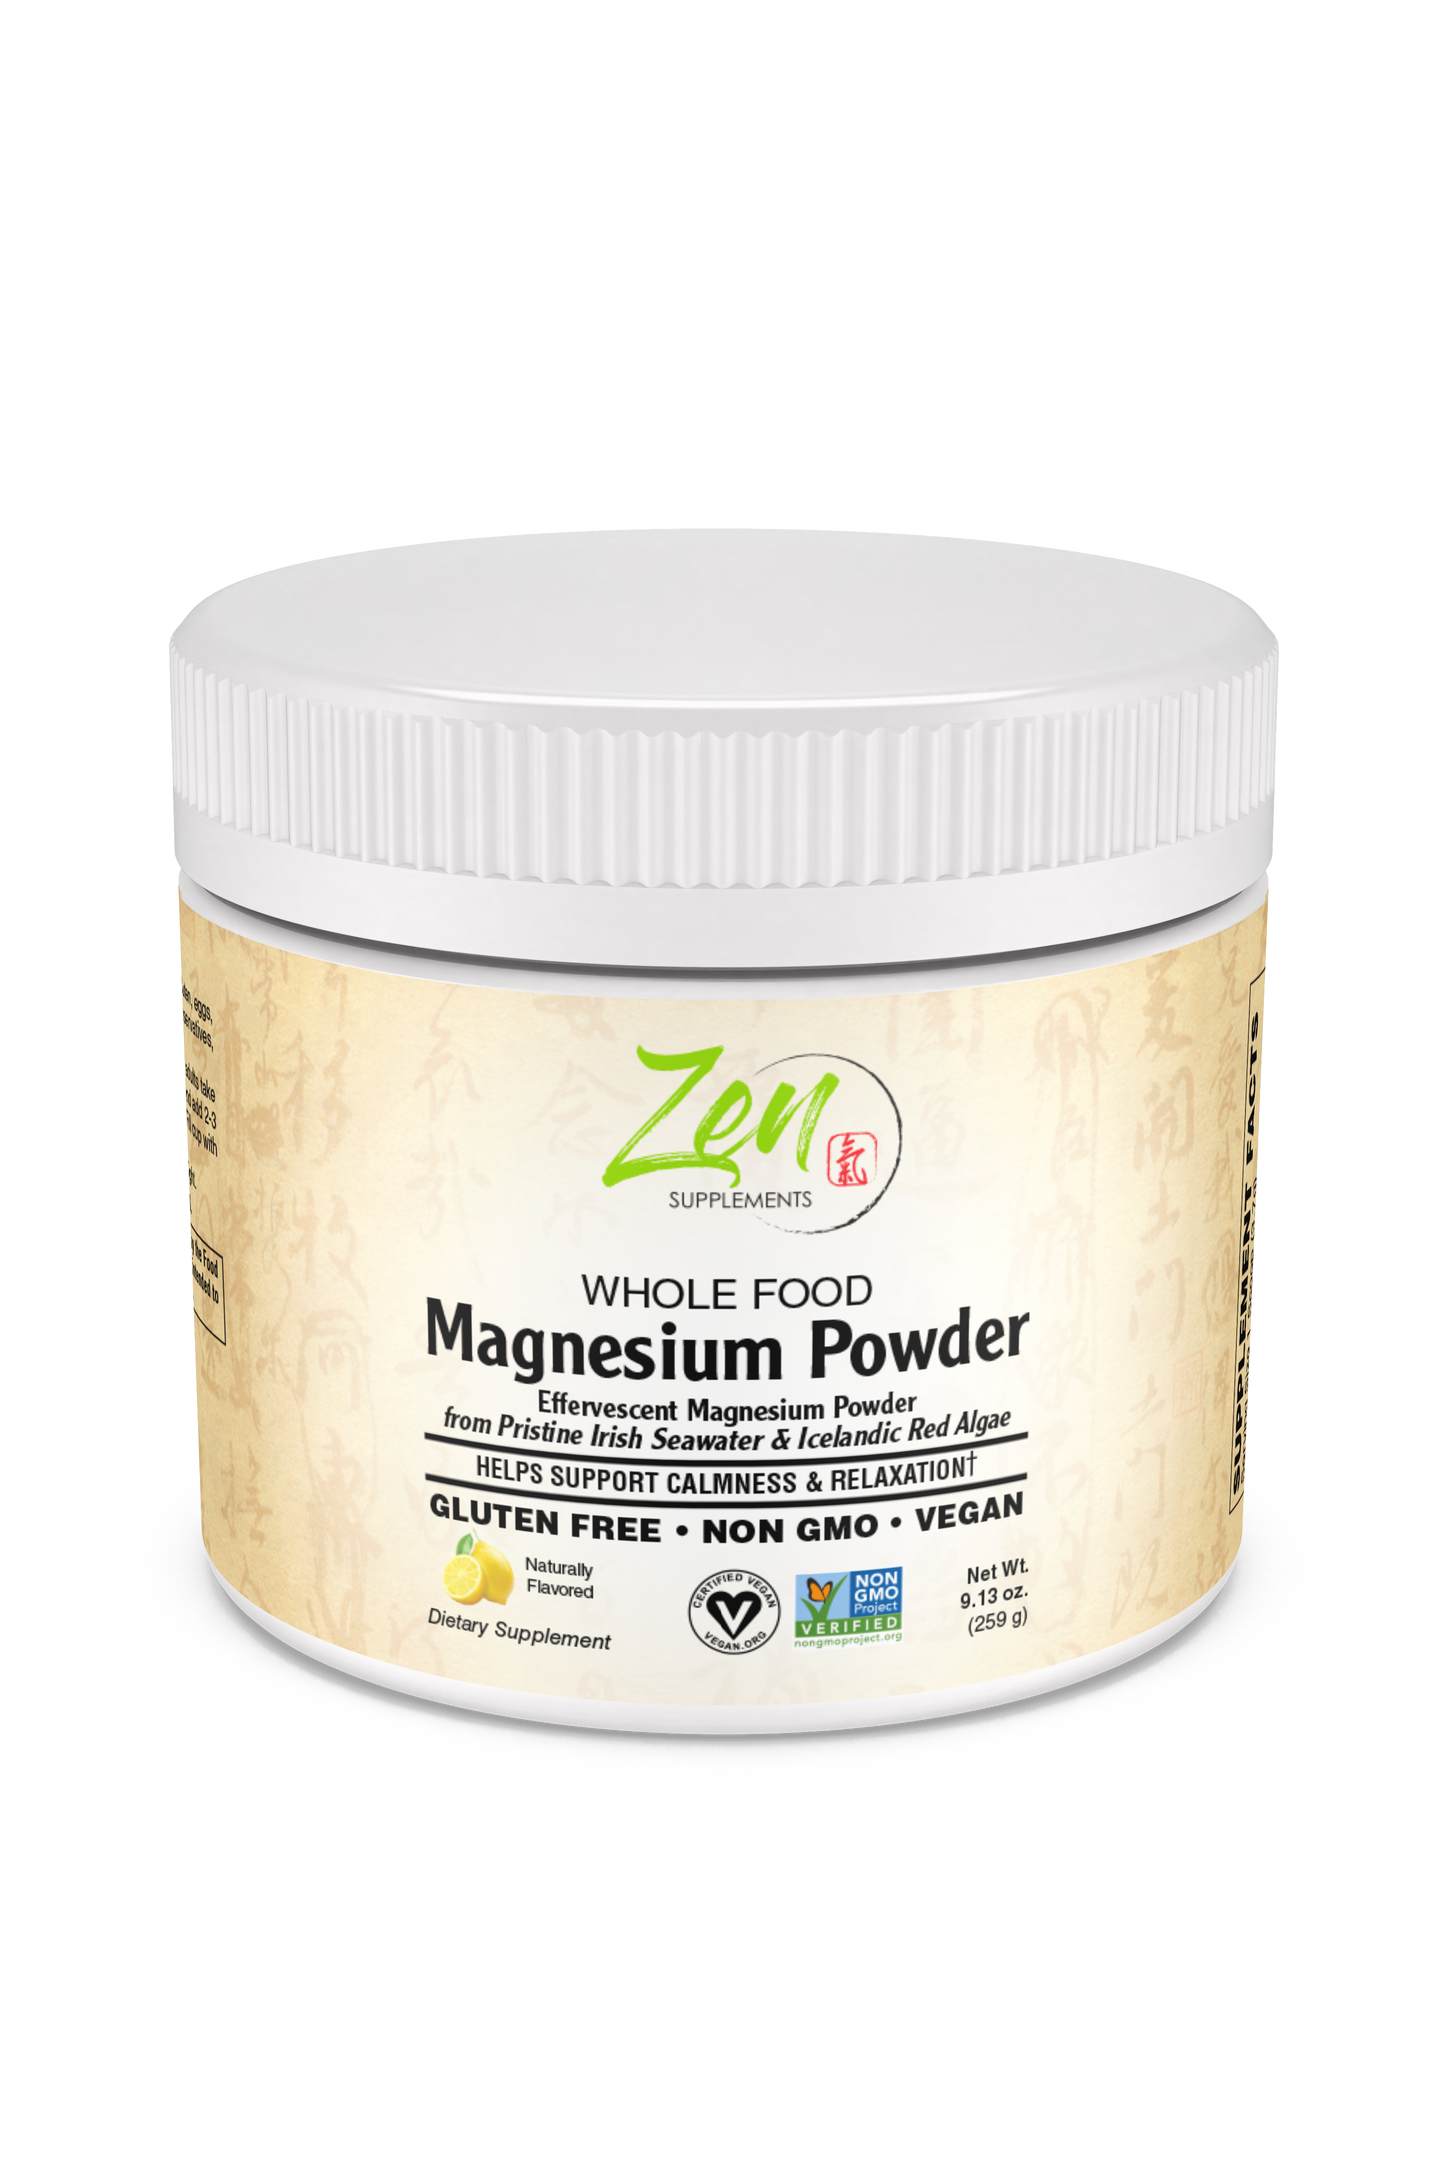 Whole Food Magnesium Powder Supplement 259g Powder